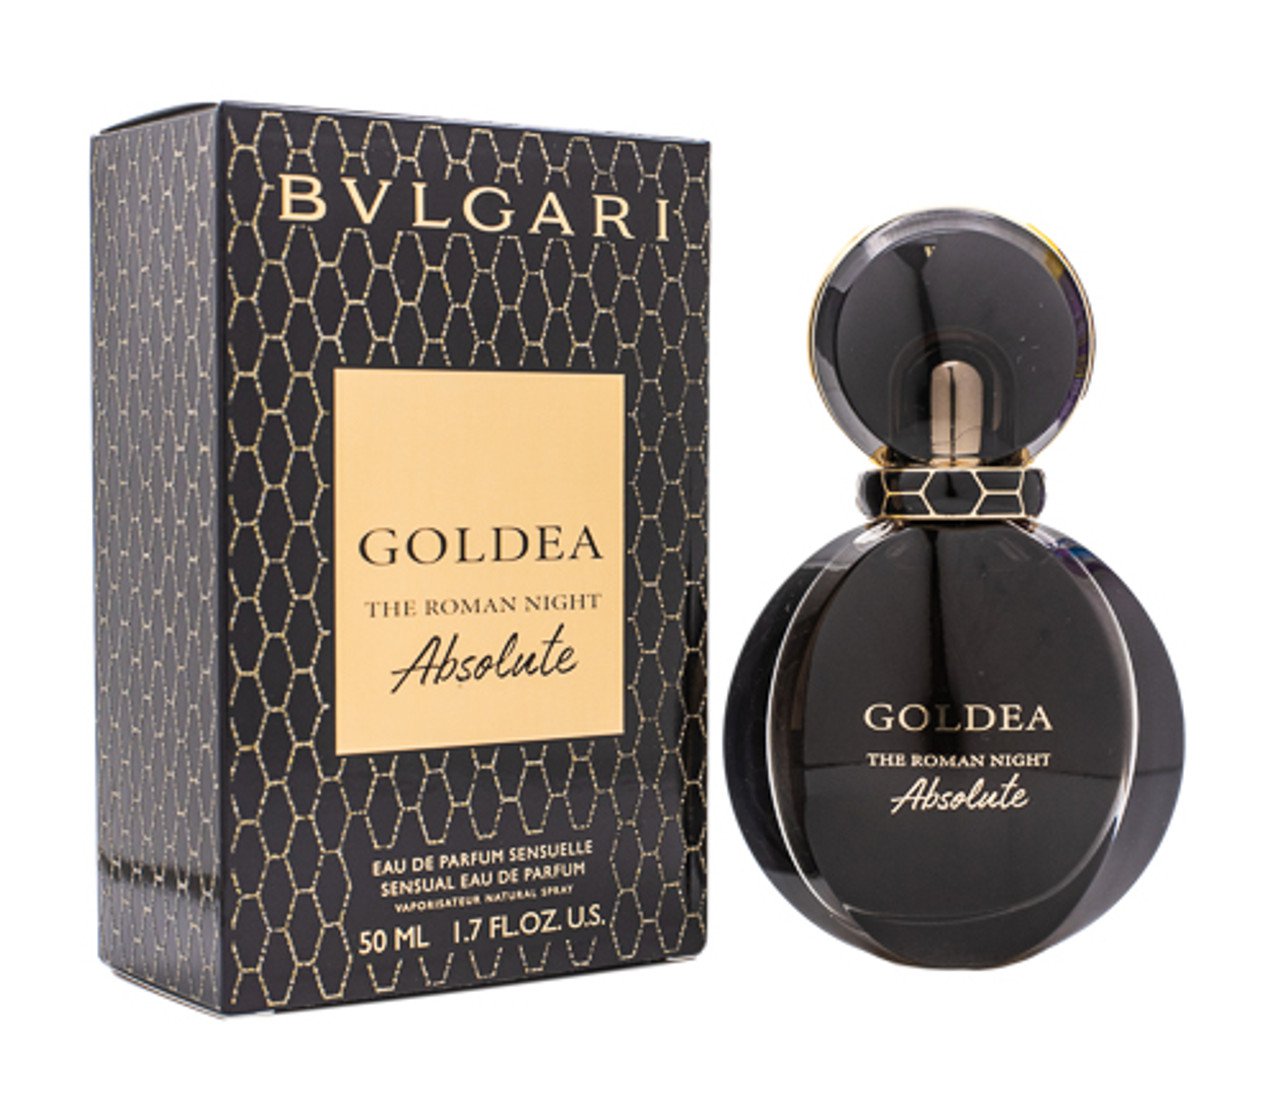 Bvlgari Goldea The Roman Night Absolute 1.7 oz Sensual Eau De Parfum Spray for Women